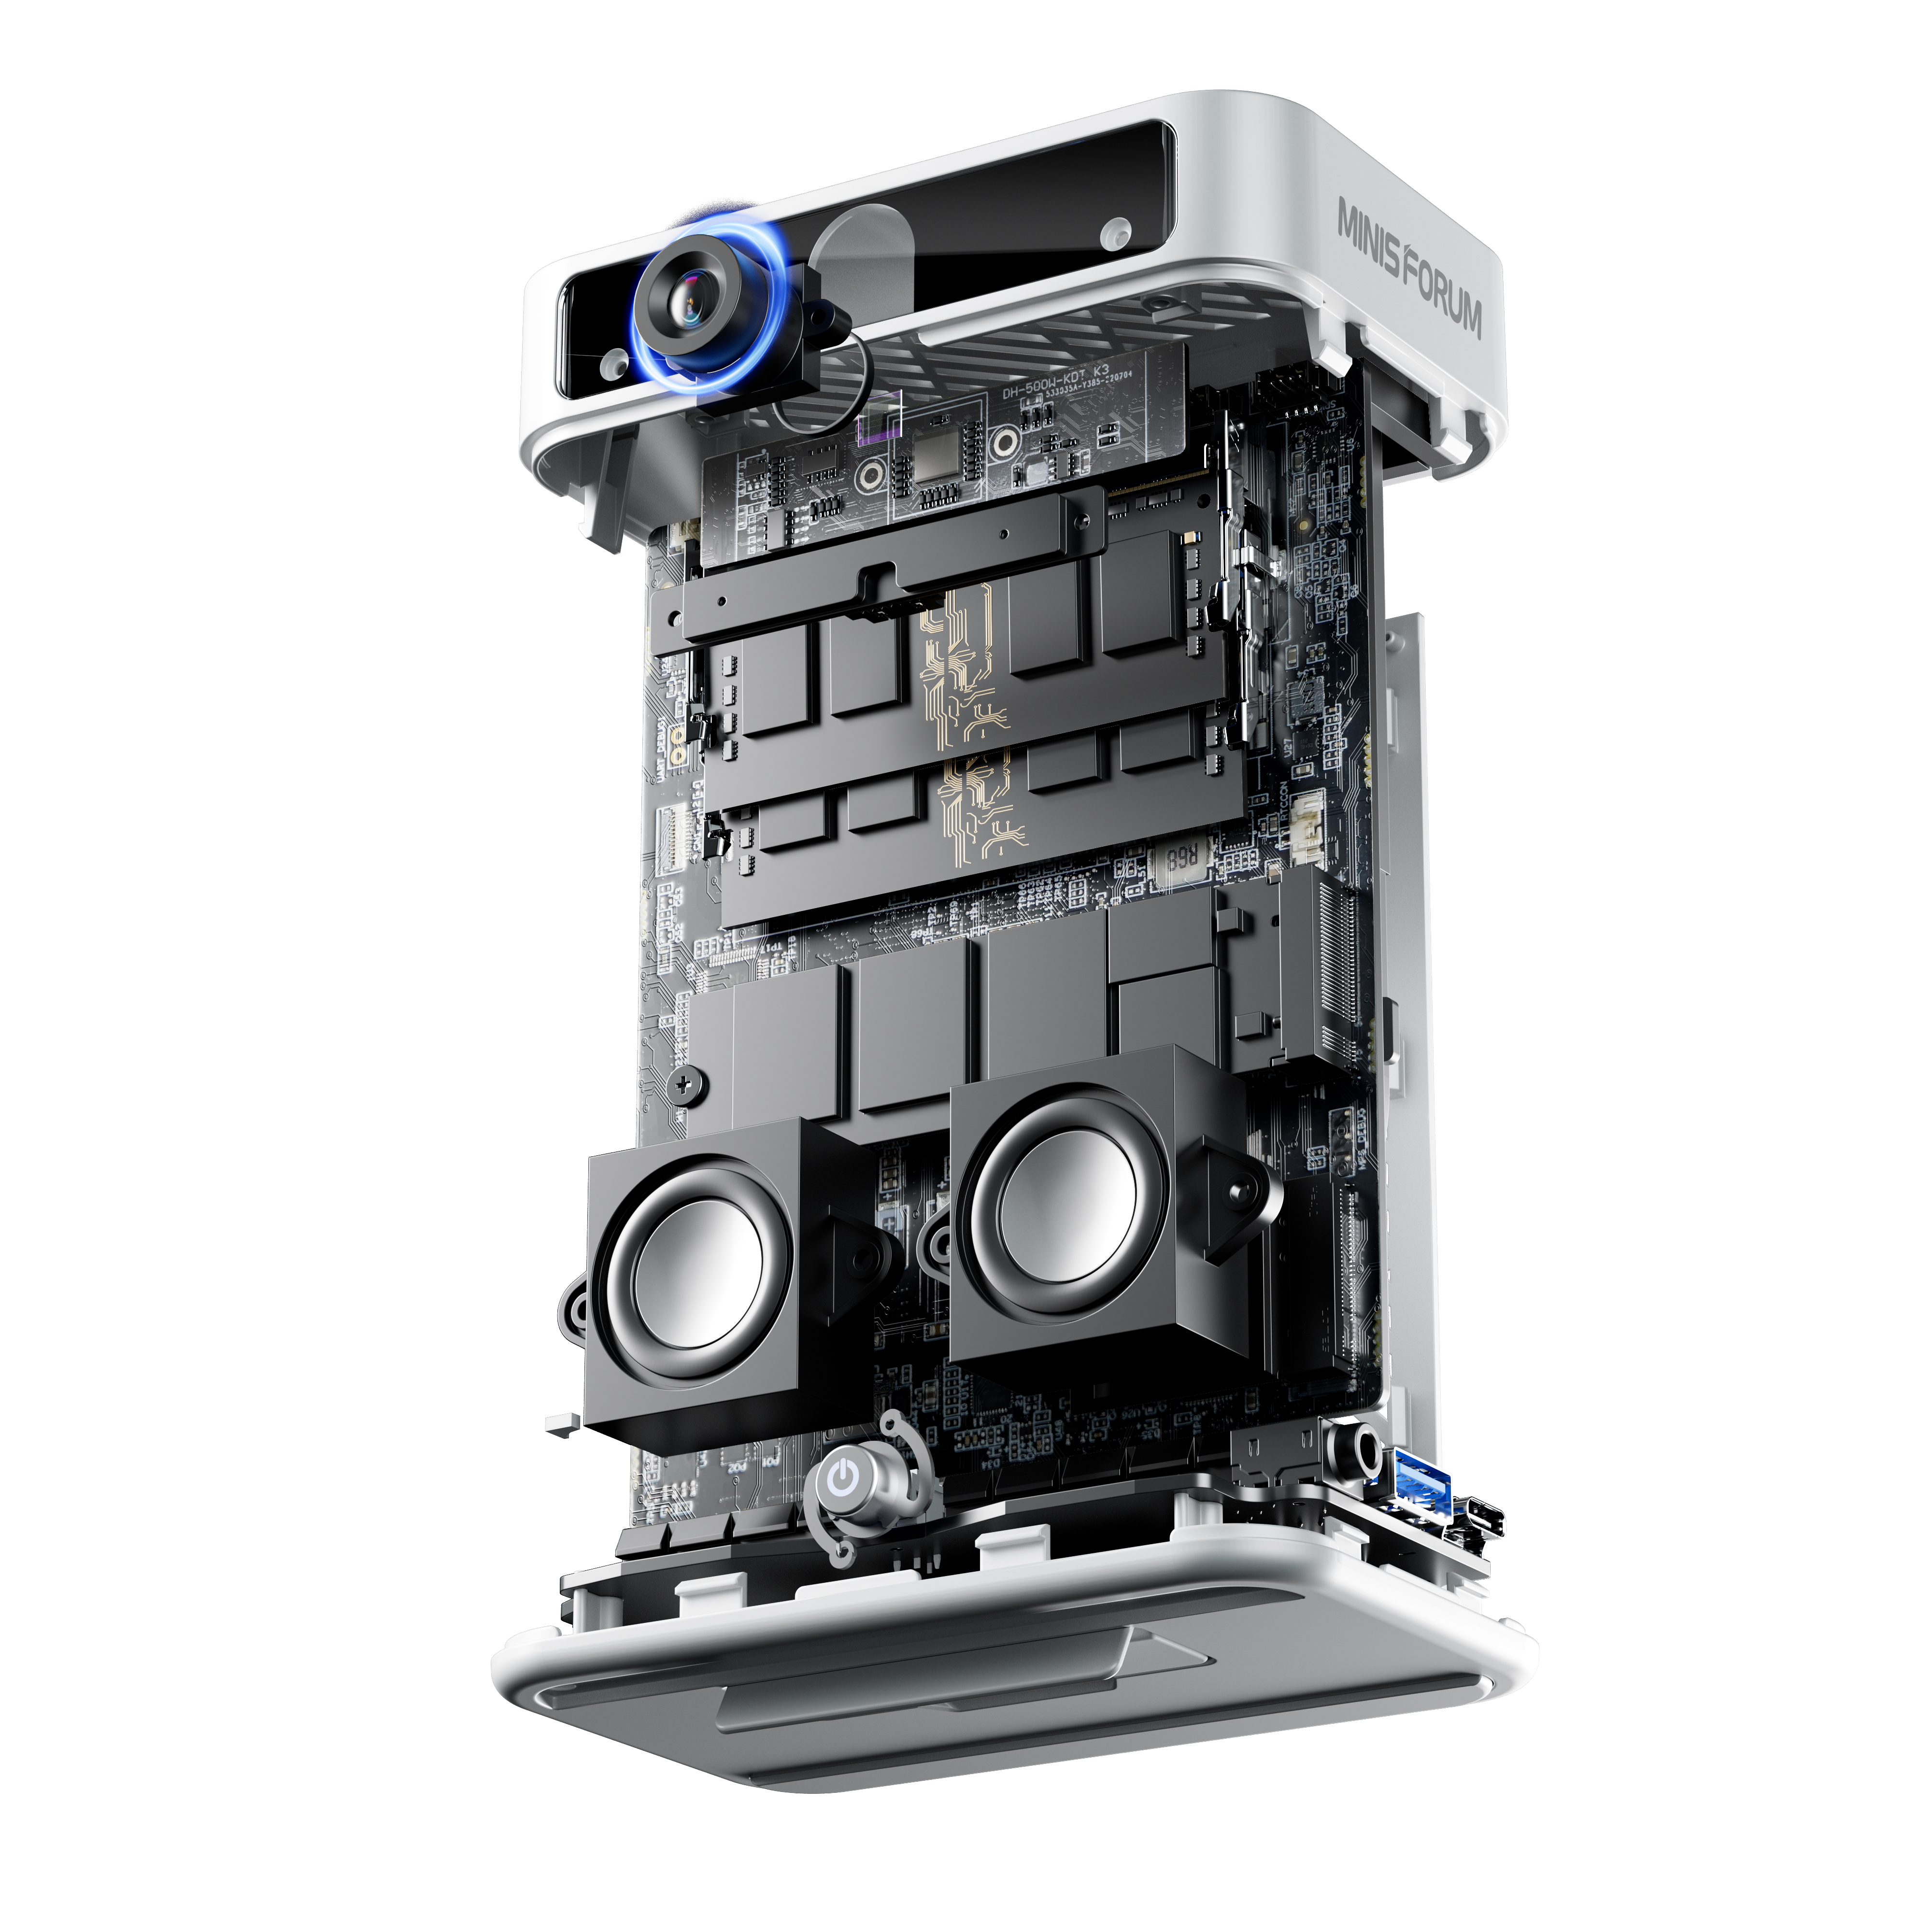 Beelink EQ12 debuts as new Intel Alder Lake-N mini-PC from US$239